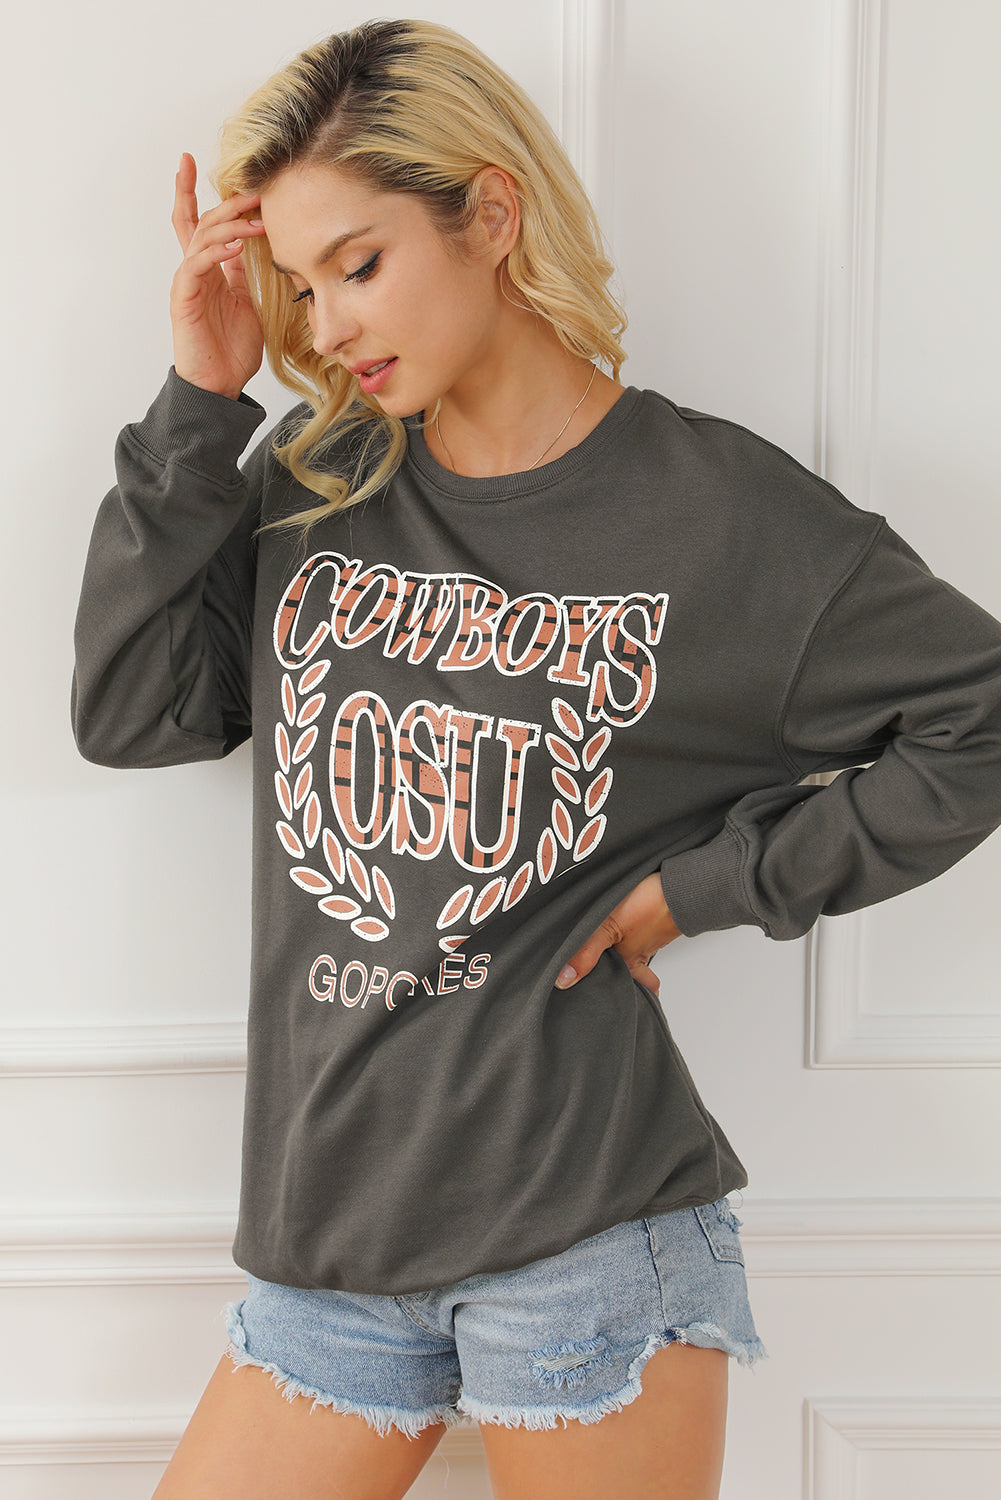 Gray COWBOY OSU Go Pokes Oversized Sweatshirt